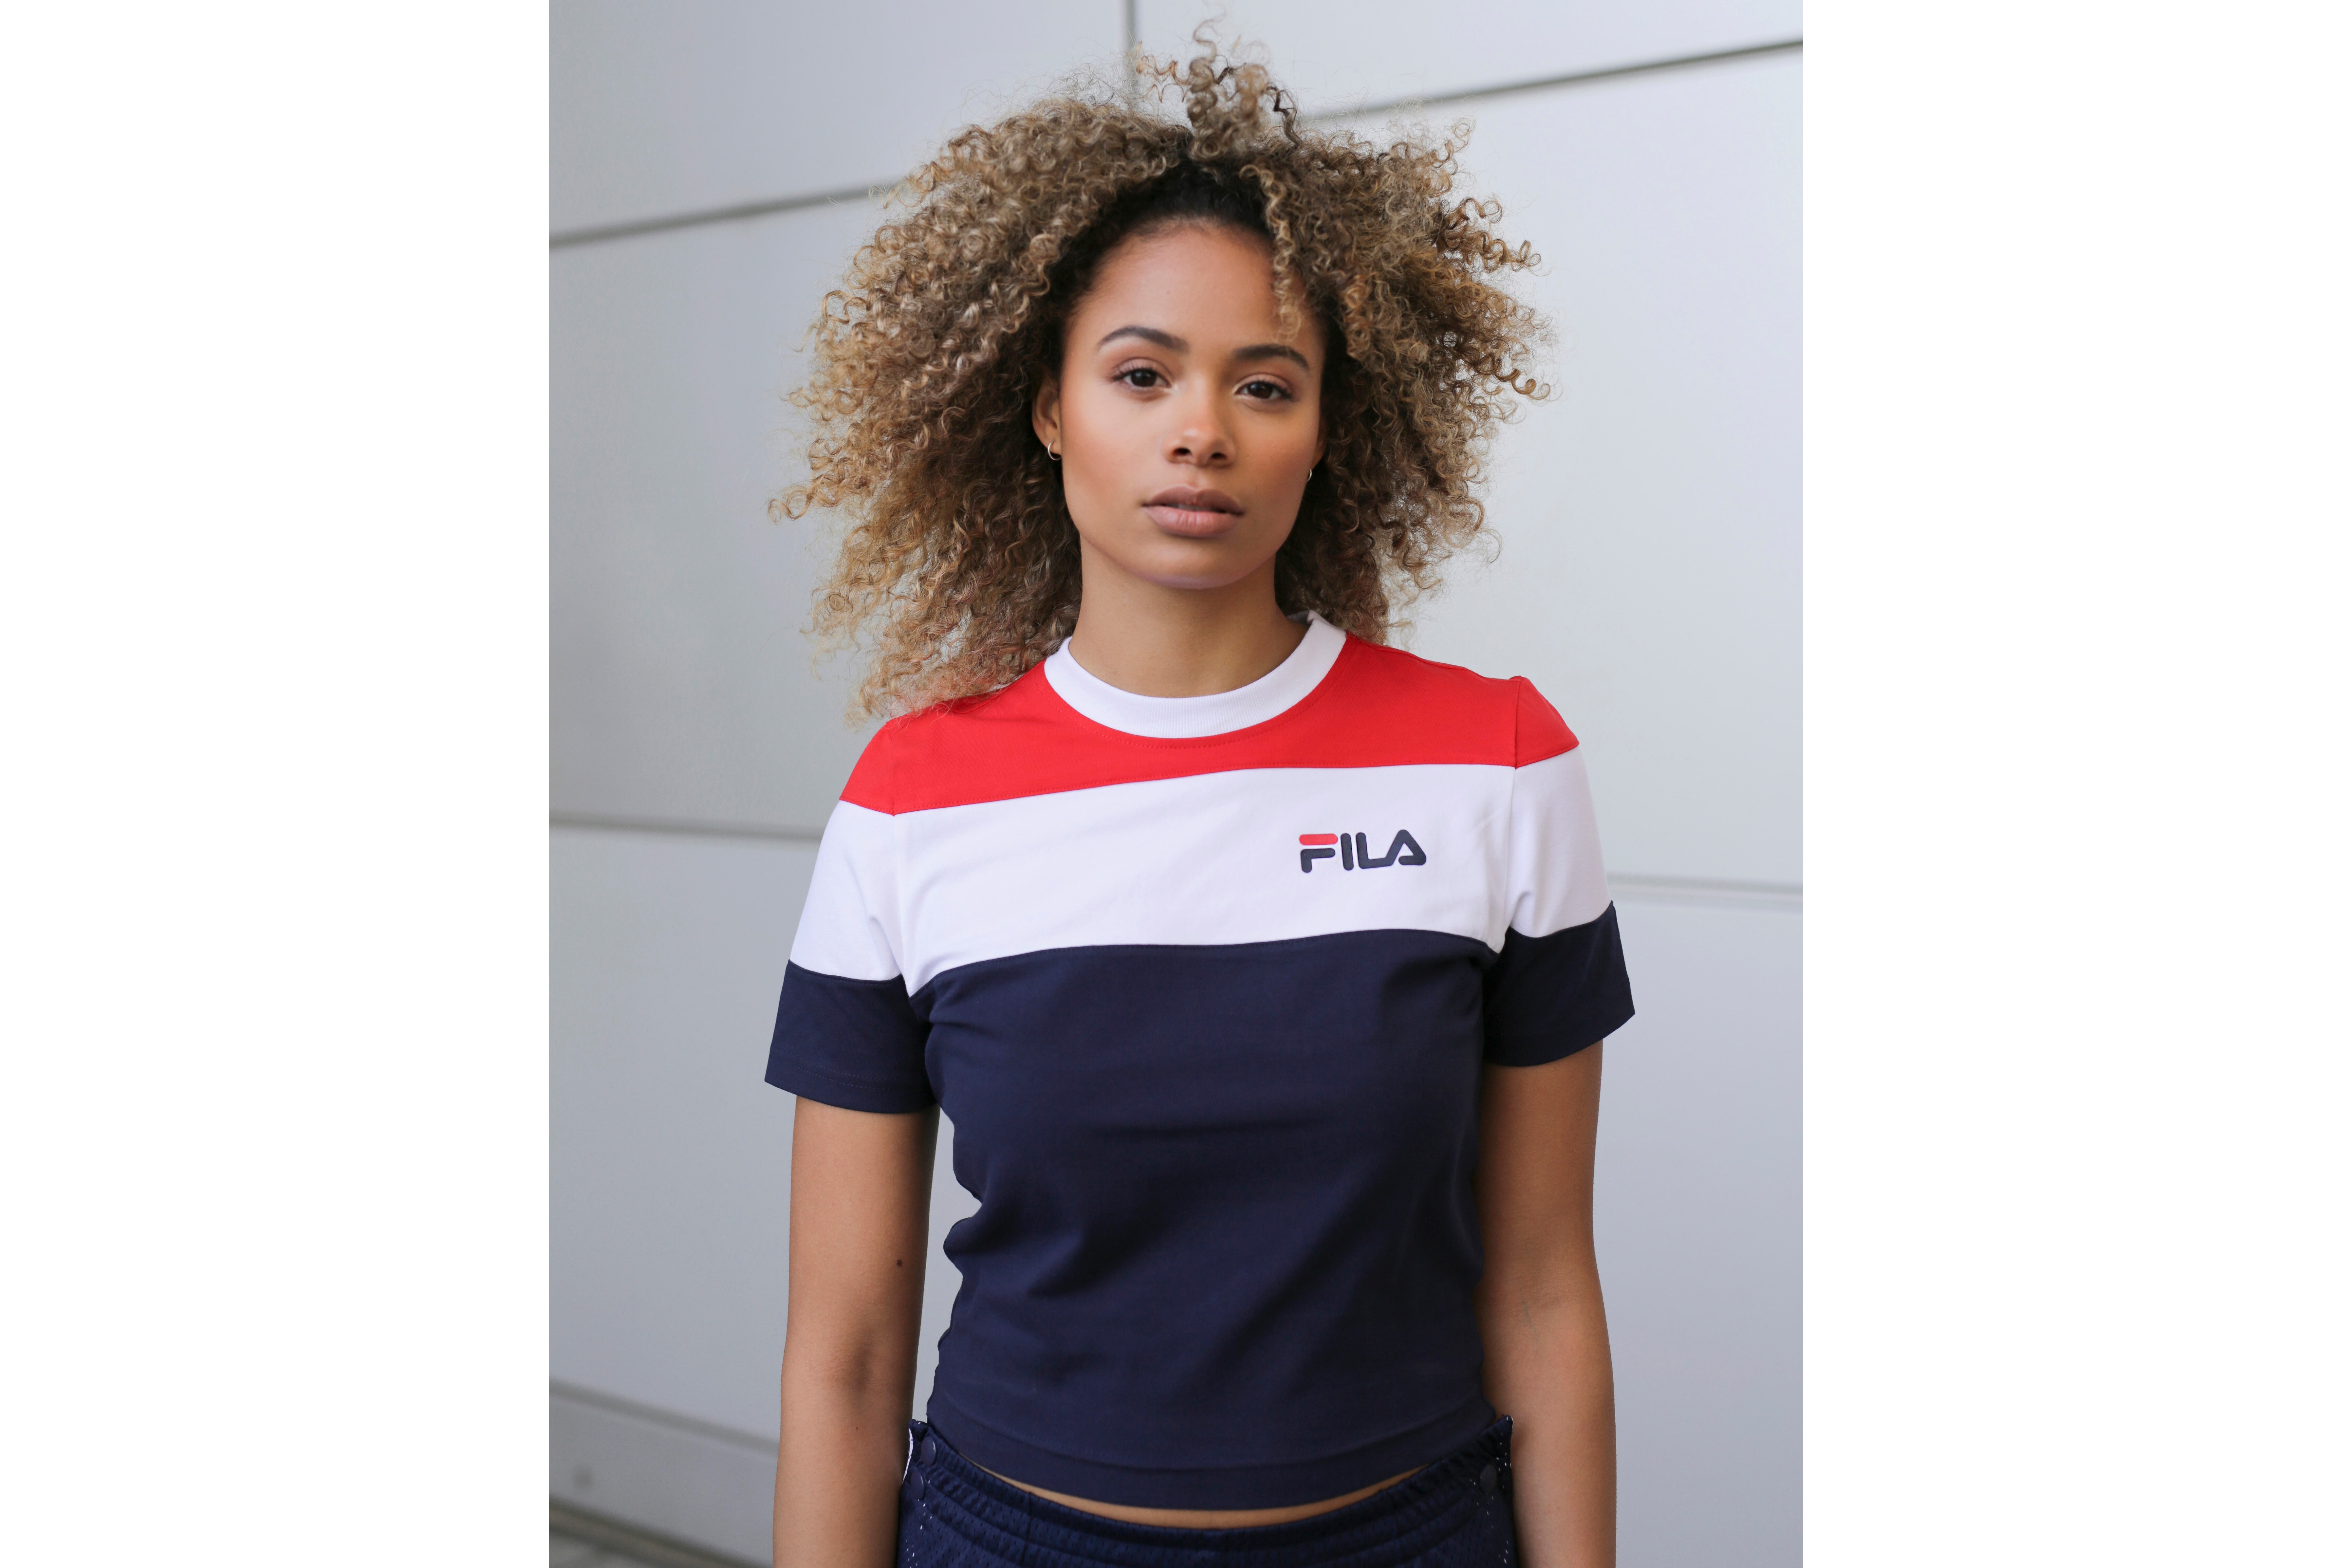 FILA Spring/Summer 2018 Logo Lookbook OnTheBlock Retro Chic Apparel FILA Streetwear